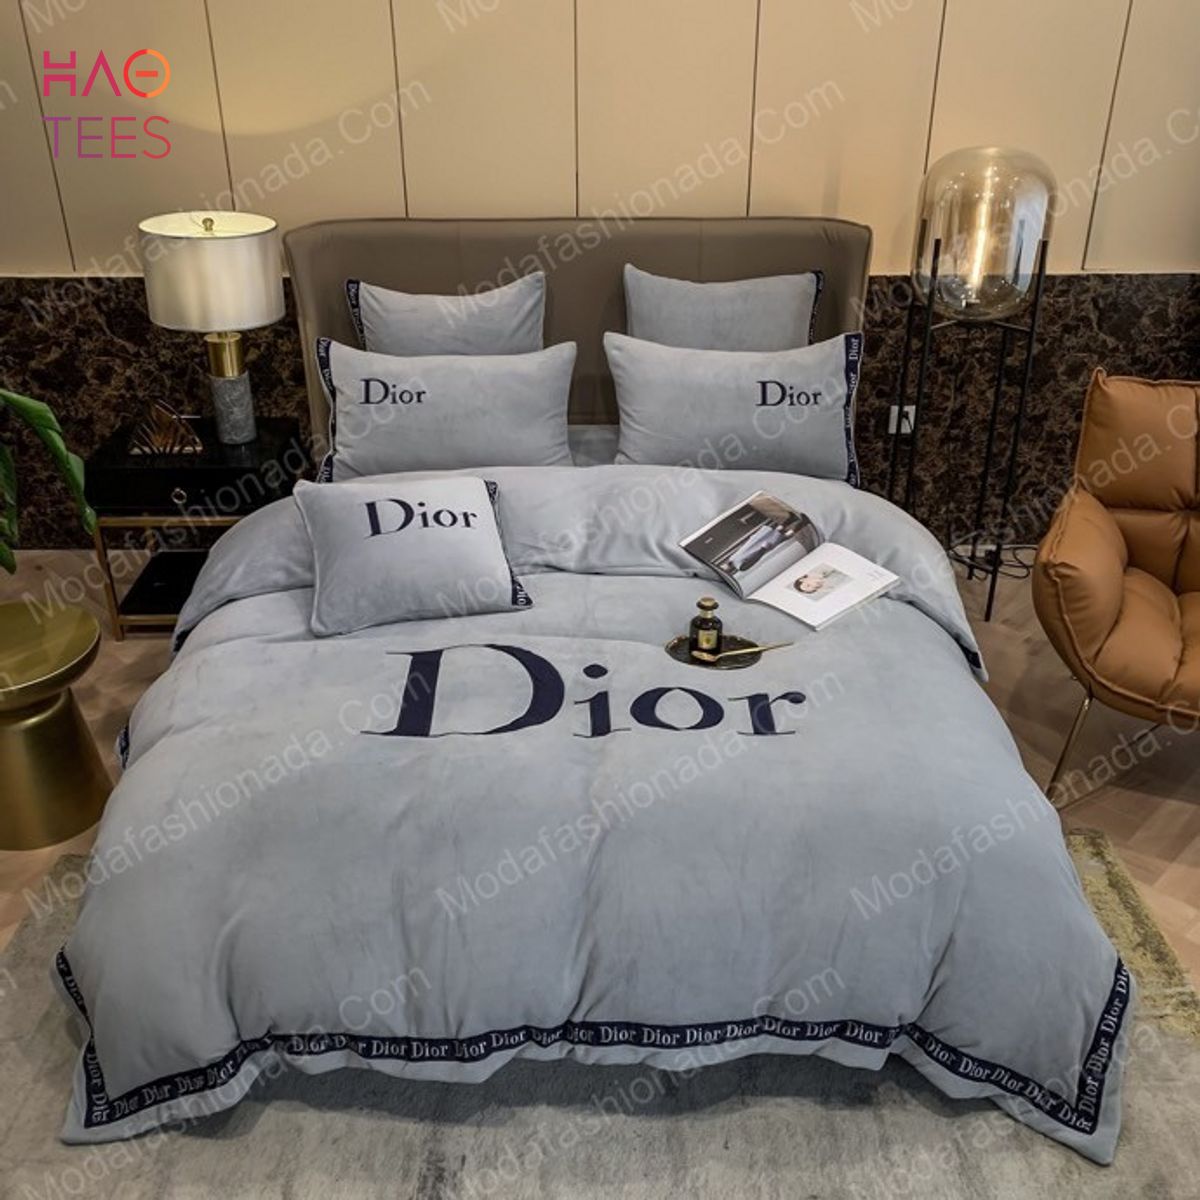 Christian Dior Logo Luxury Bedding Set